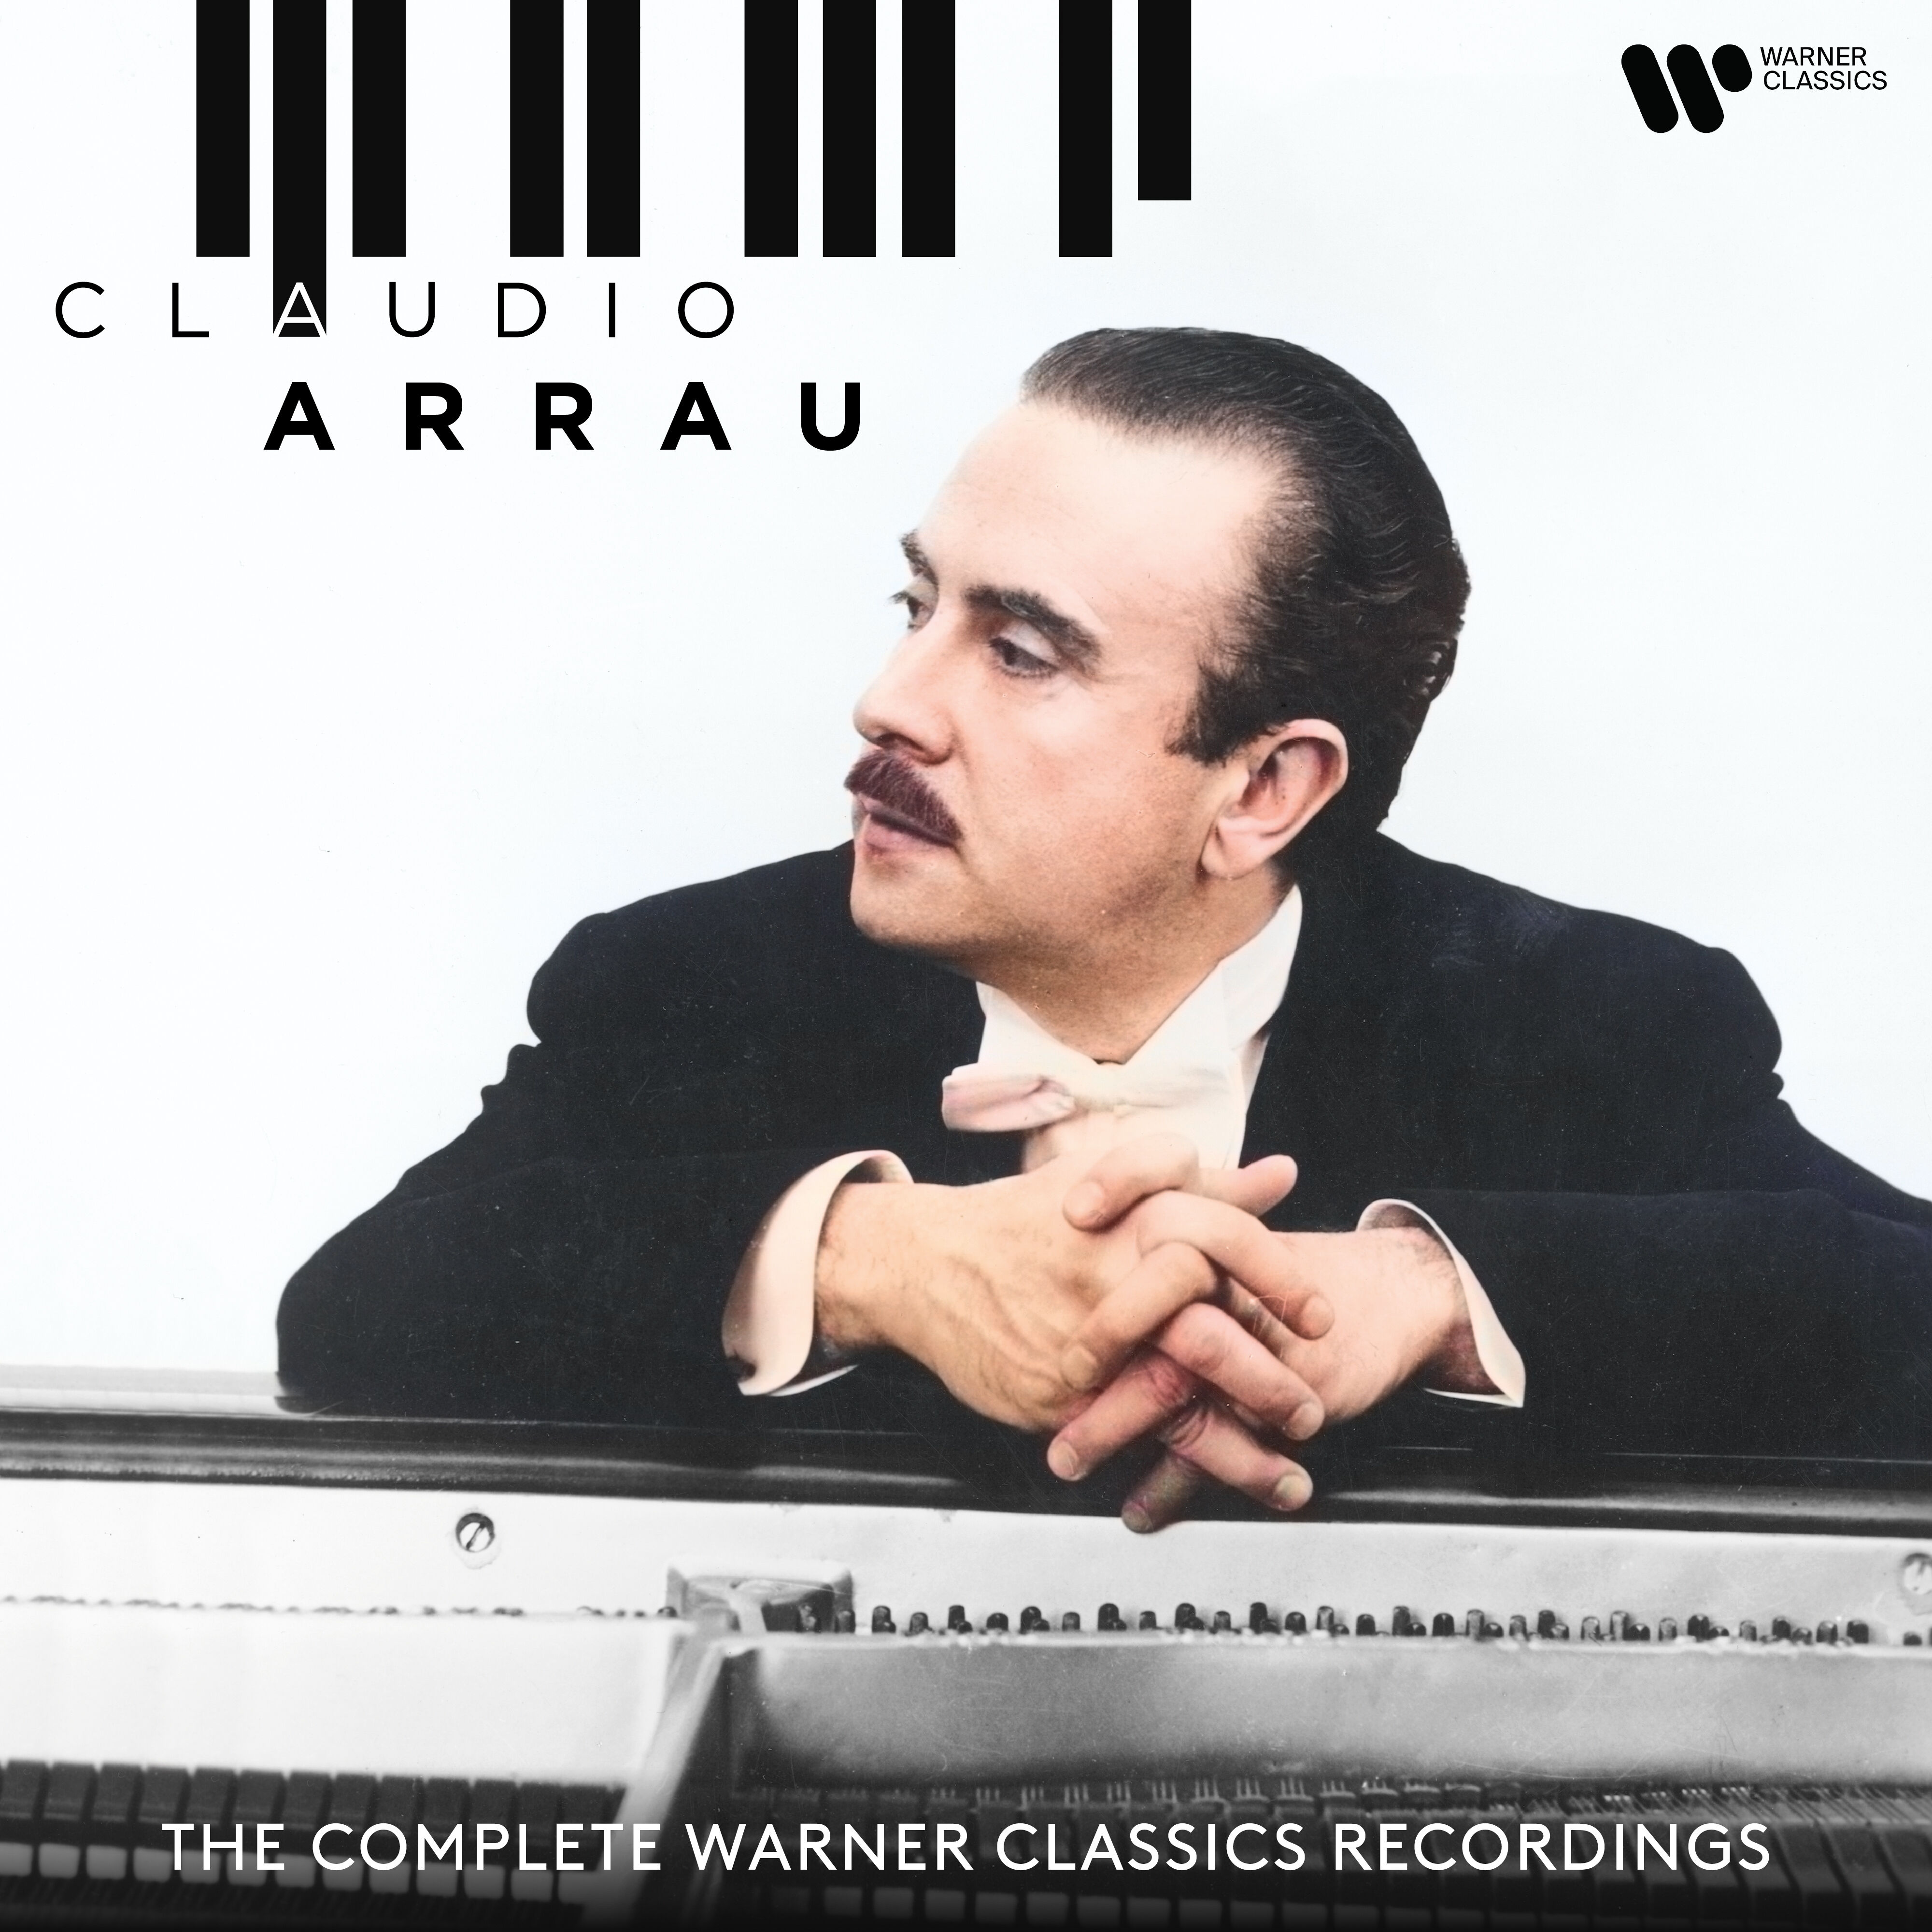 Claudio Arrau - The Complete Warner Classics Recordings - 04 of 10 24b192